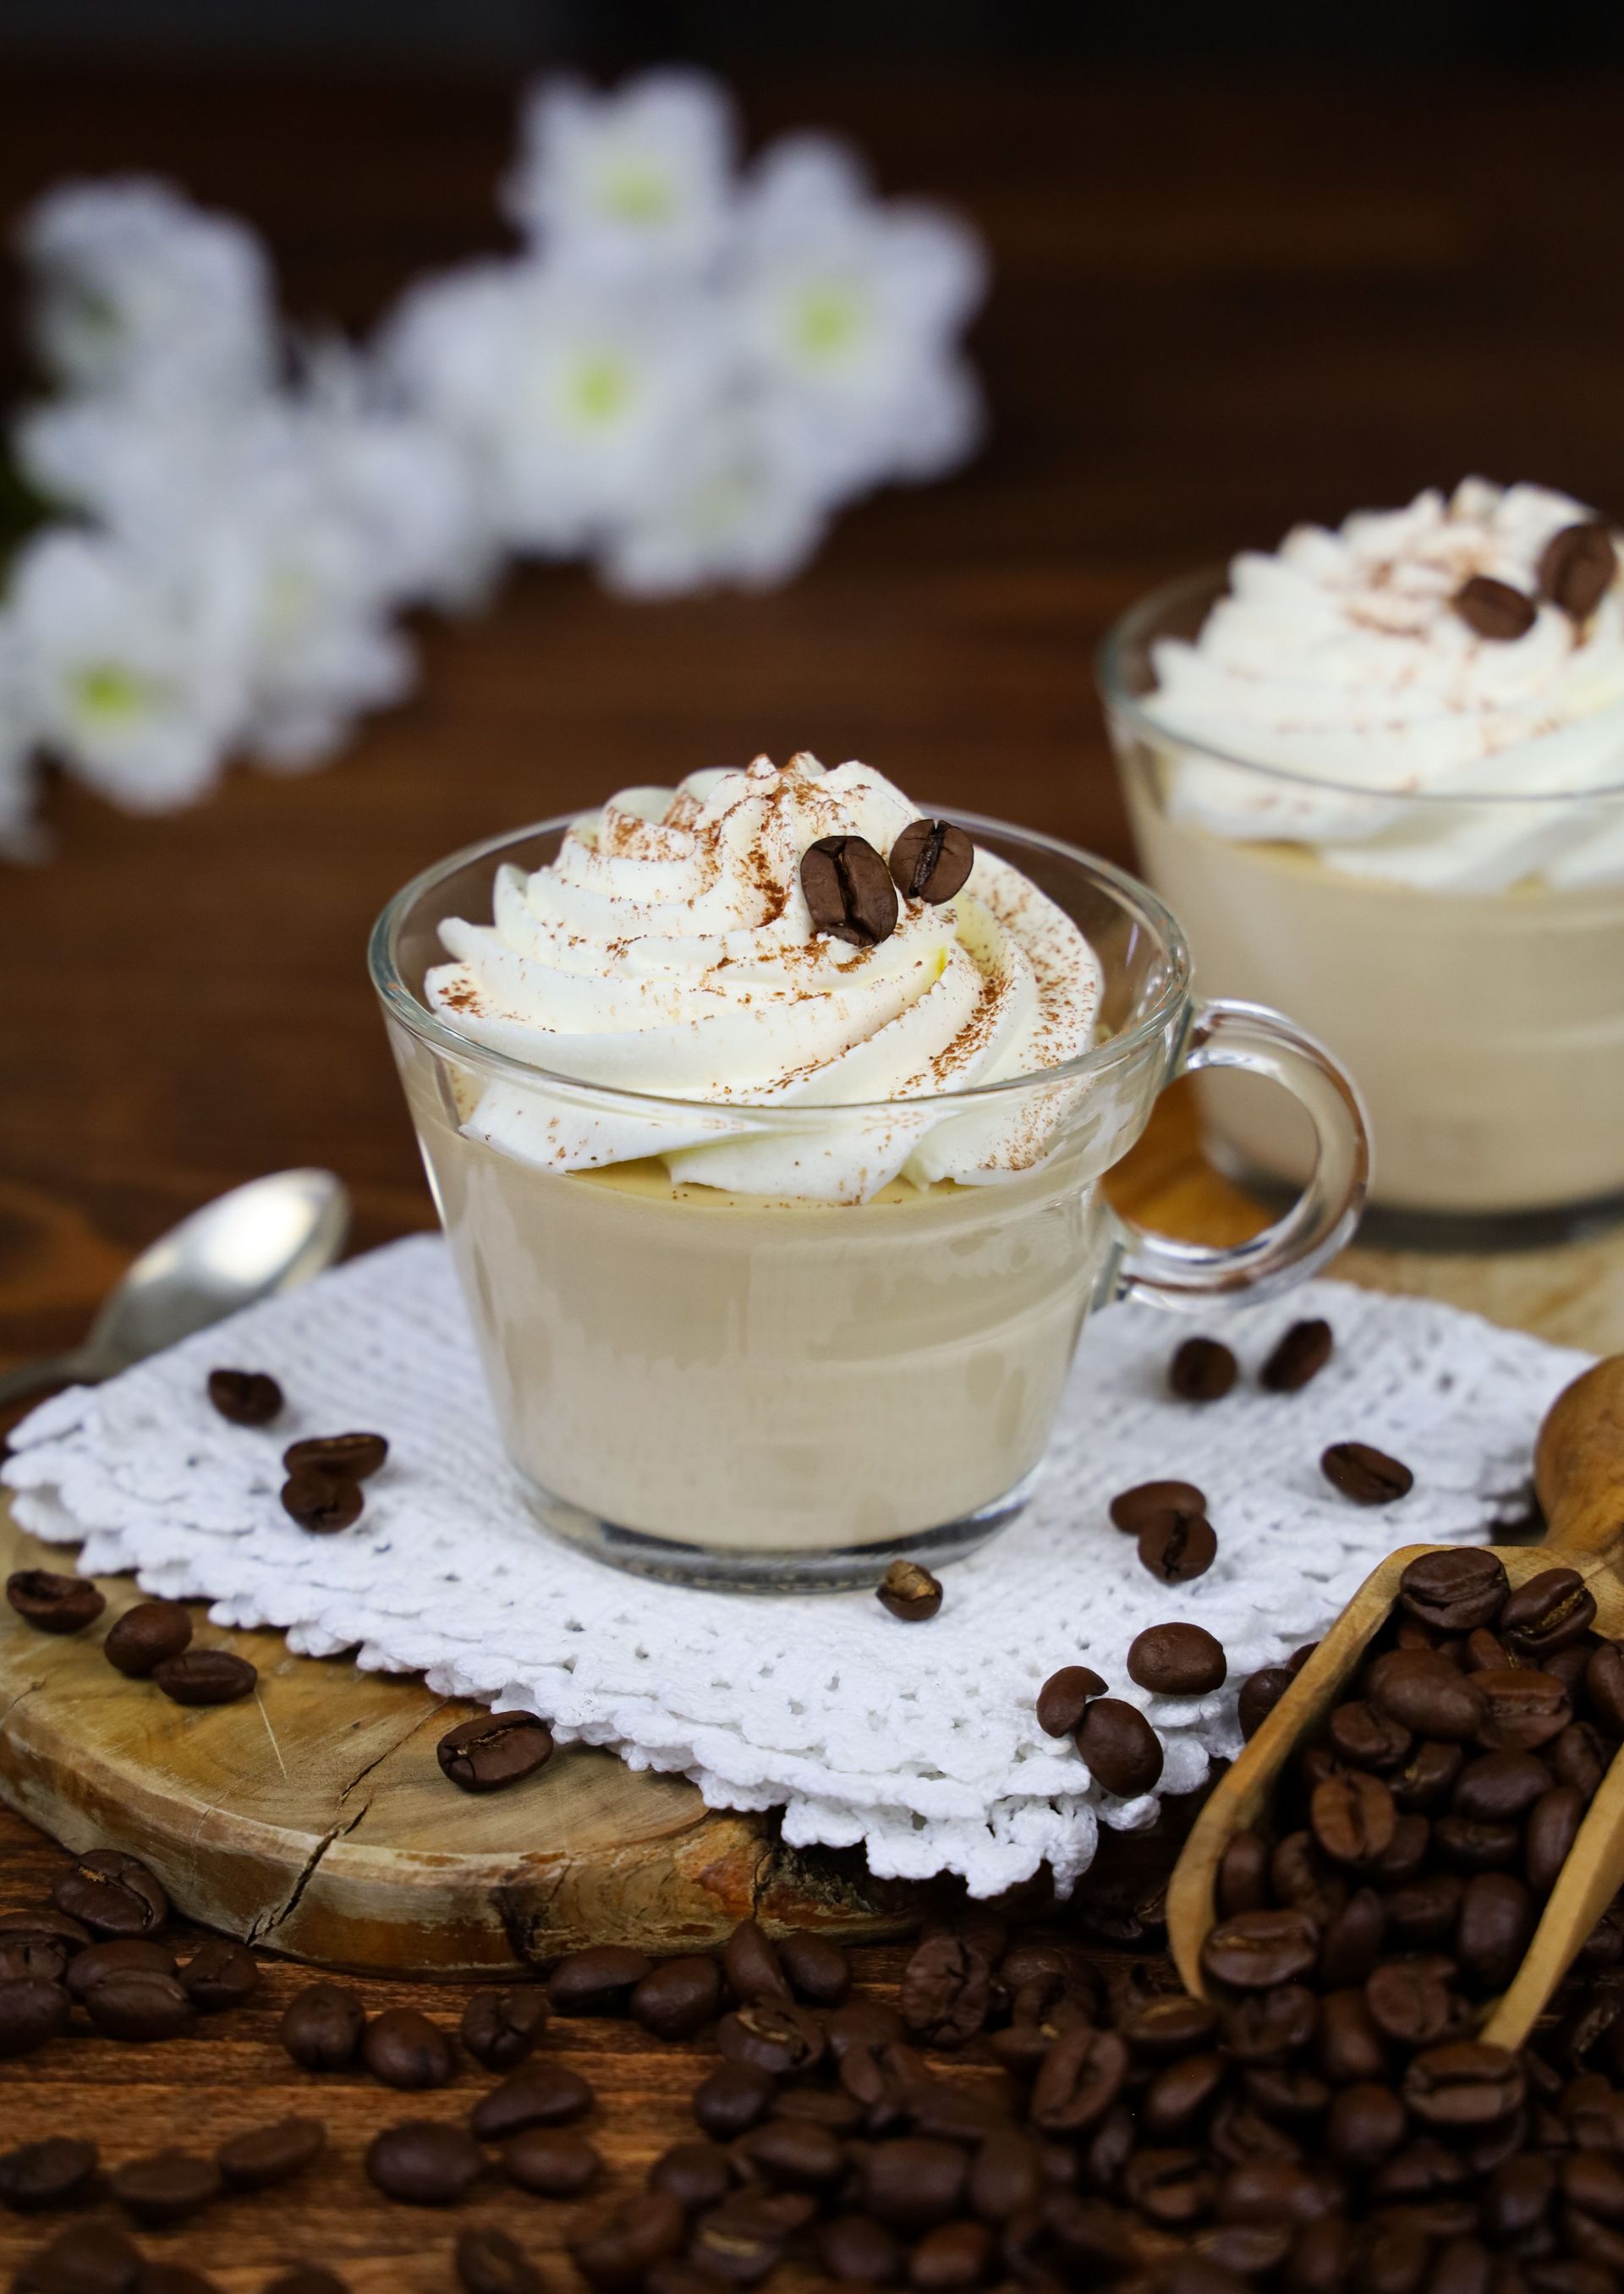 mousse καφέ με λευκή σοκολάτα.jpg